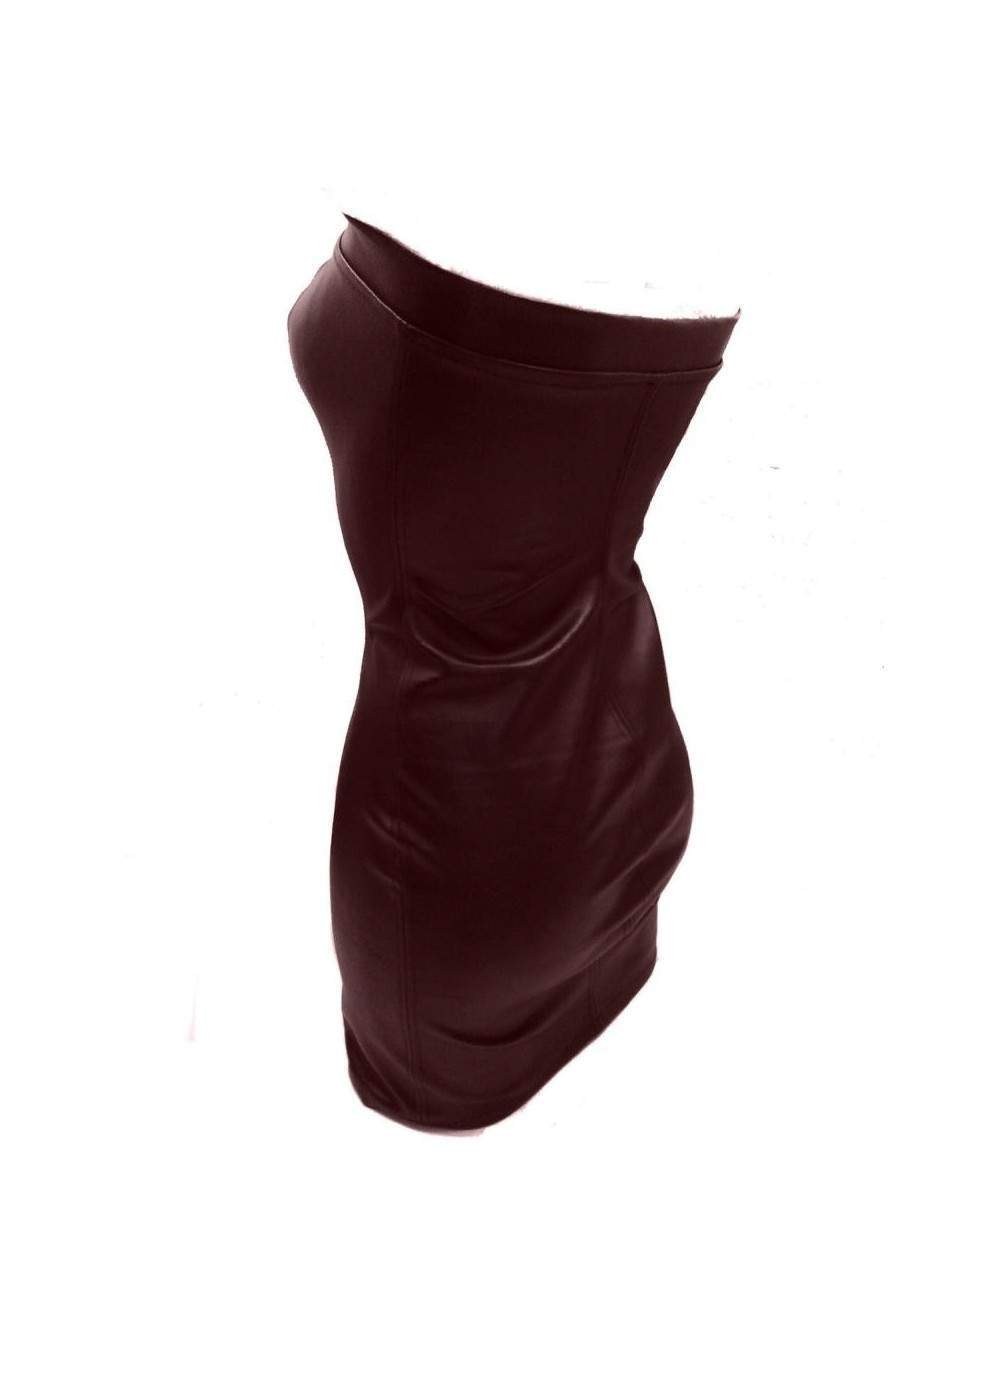 f.girth designer leather dress brown 29,00 € - 